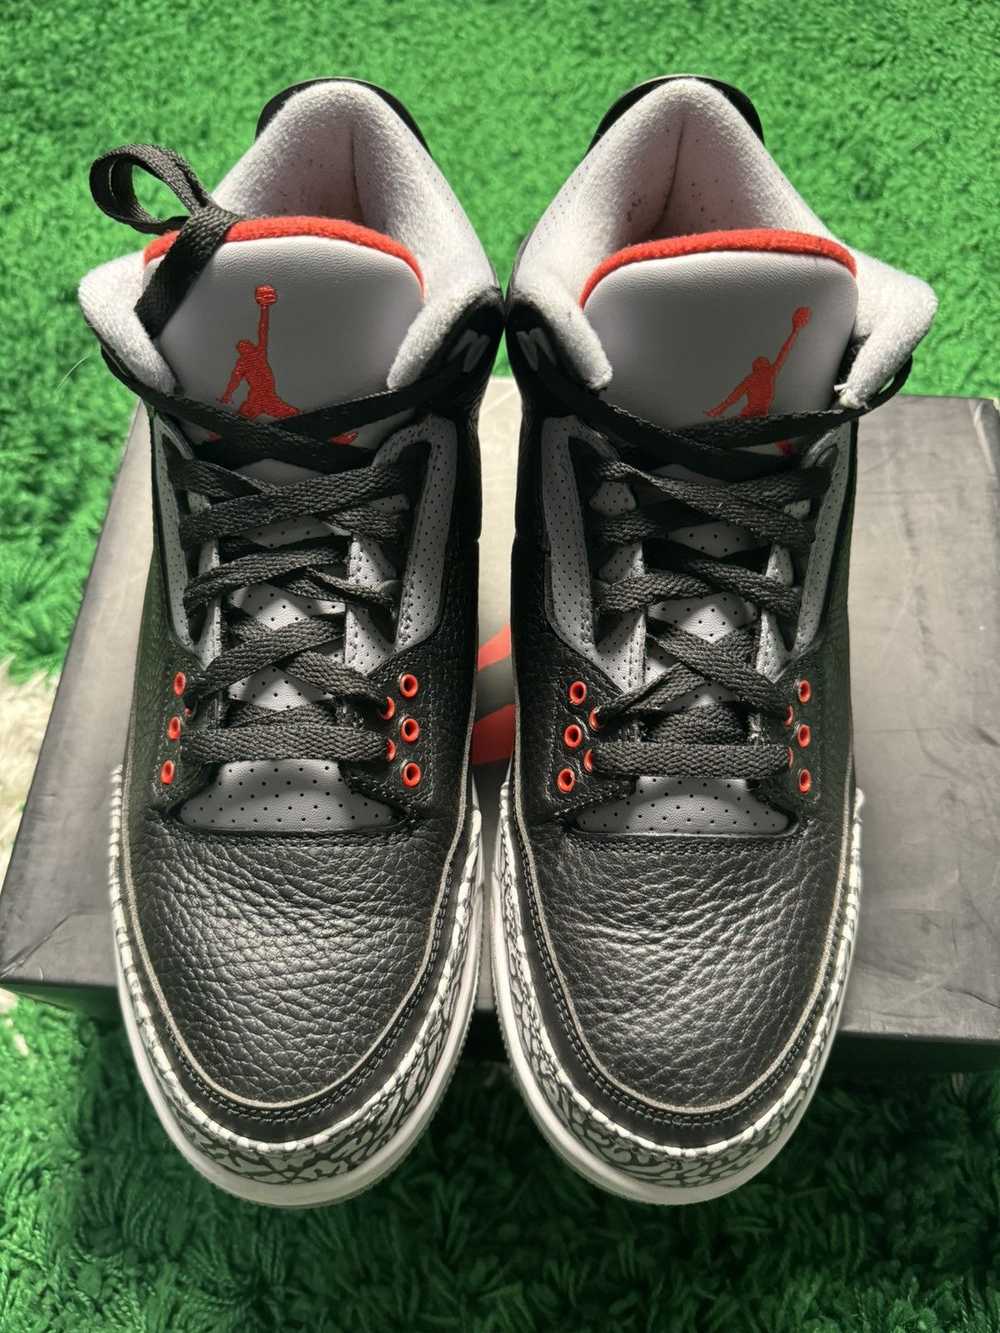 Jordan Brand Jordan Retro 3 ‘Black Cement’ - image 3